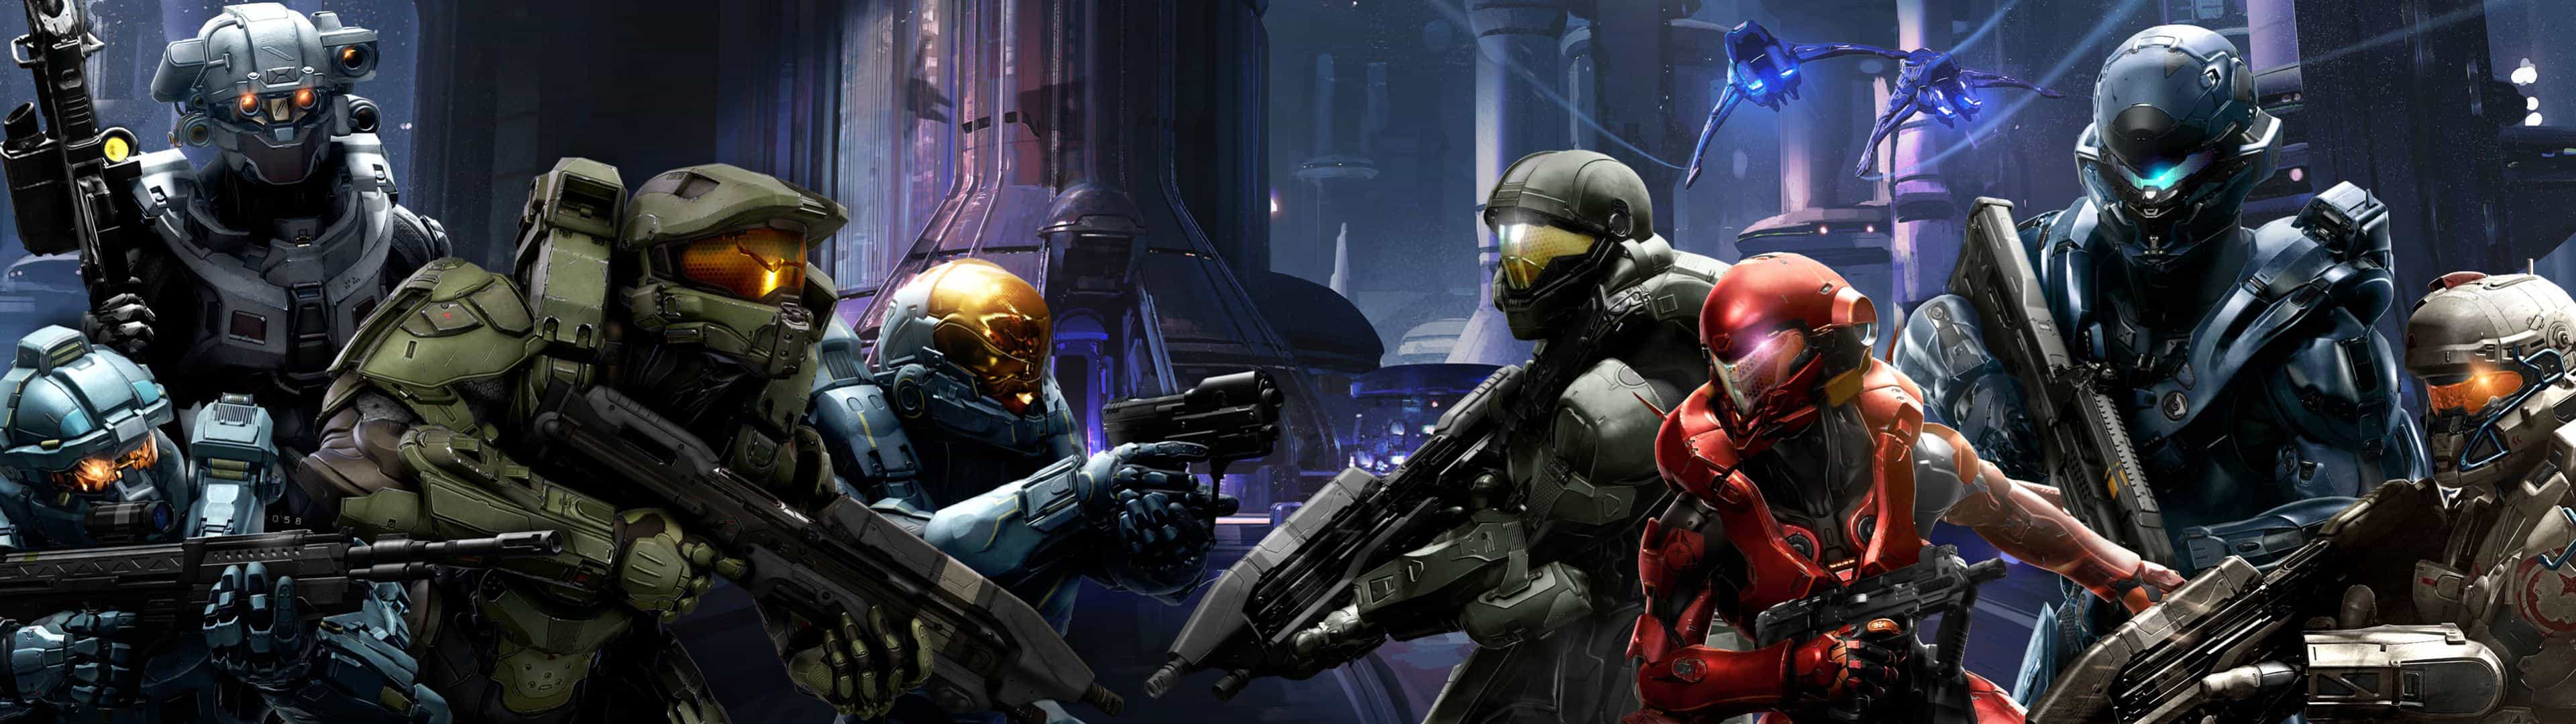 Halo Fireteam Osiris Vs Blue Team Dual Monitor Wallpaper